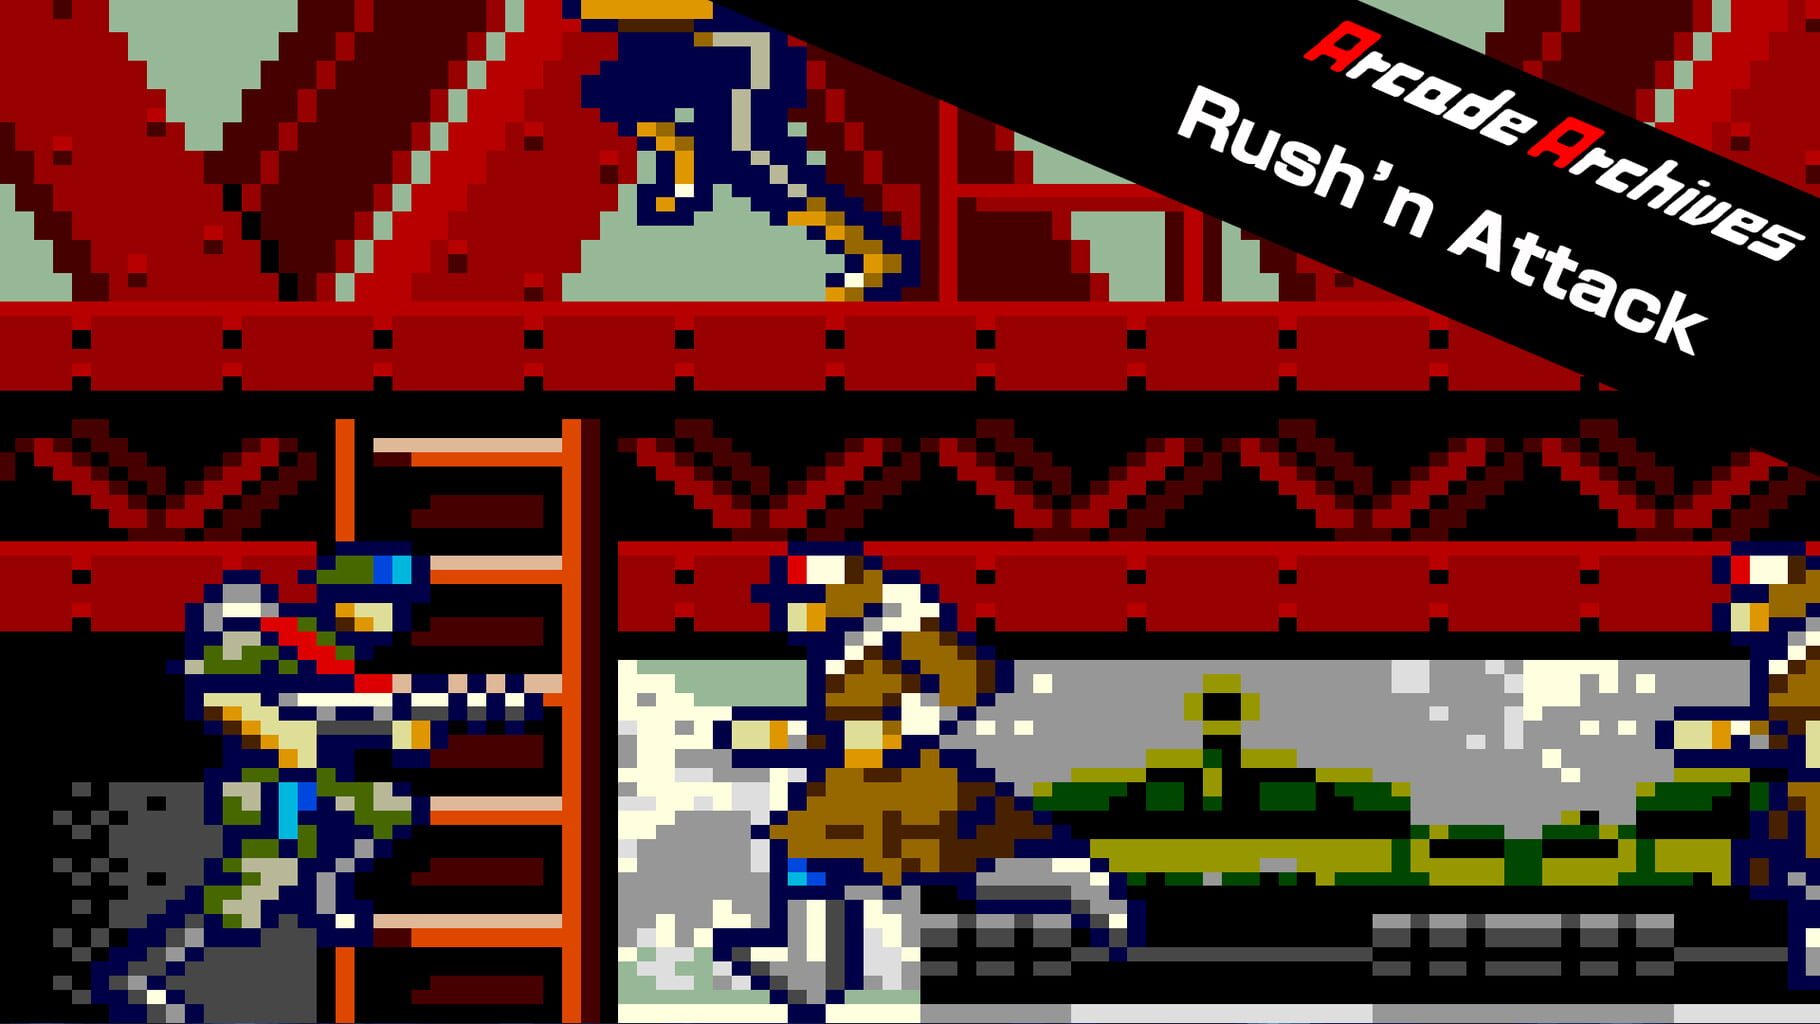 Arcade Archives: Rush'n Attack artwork